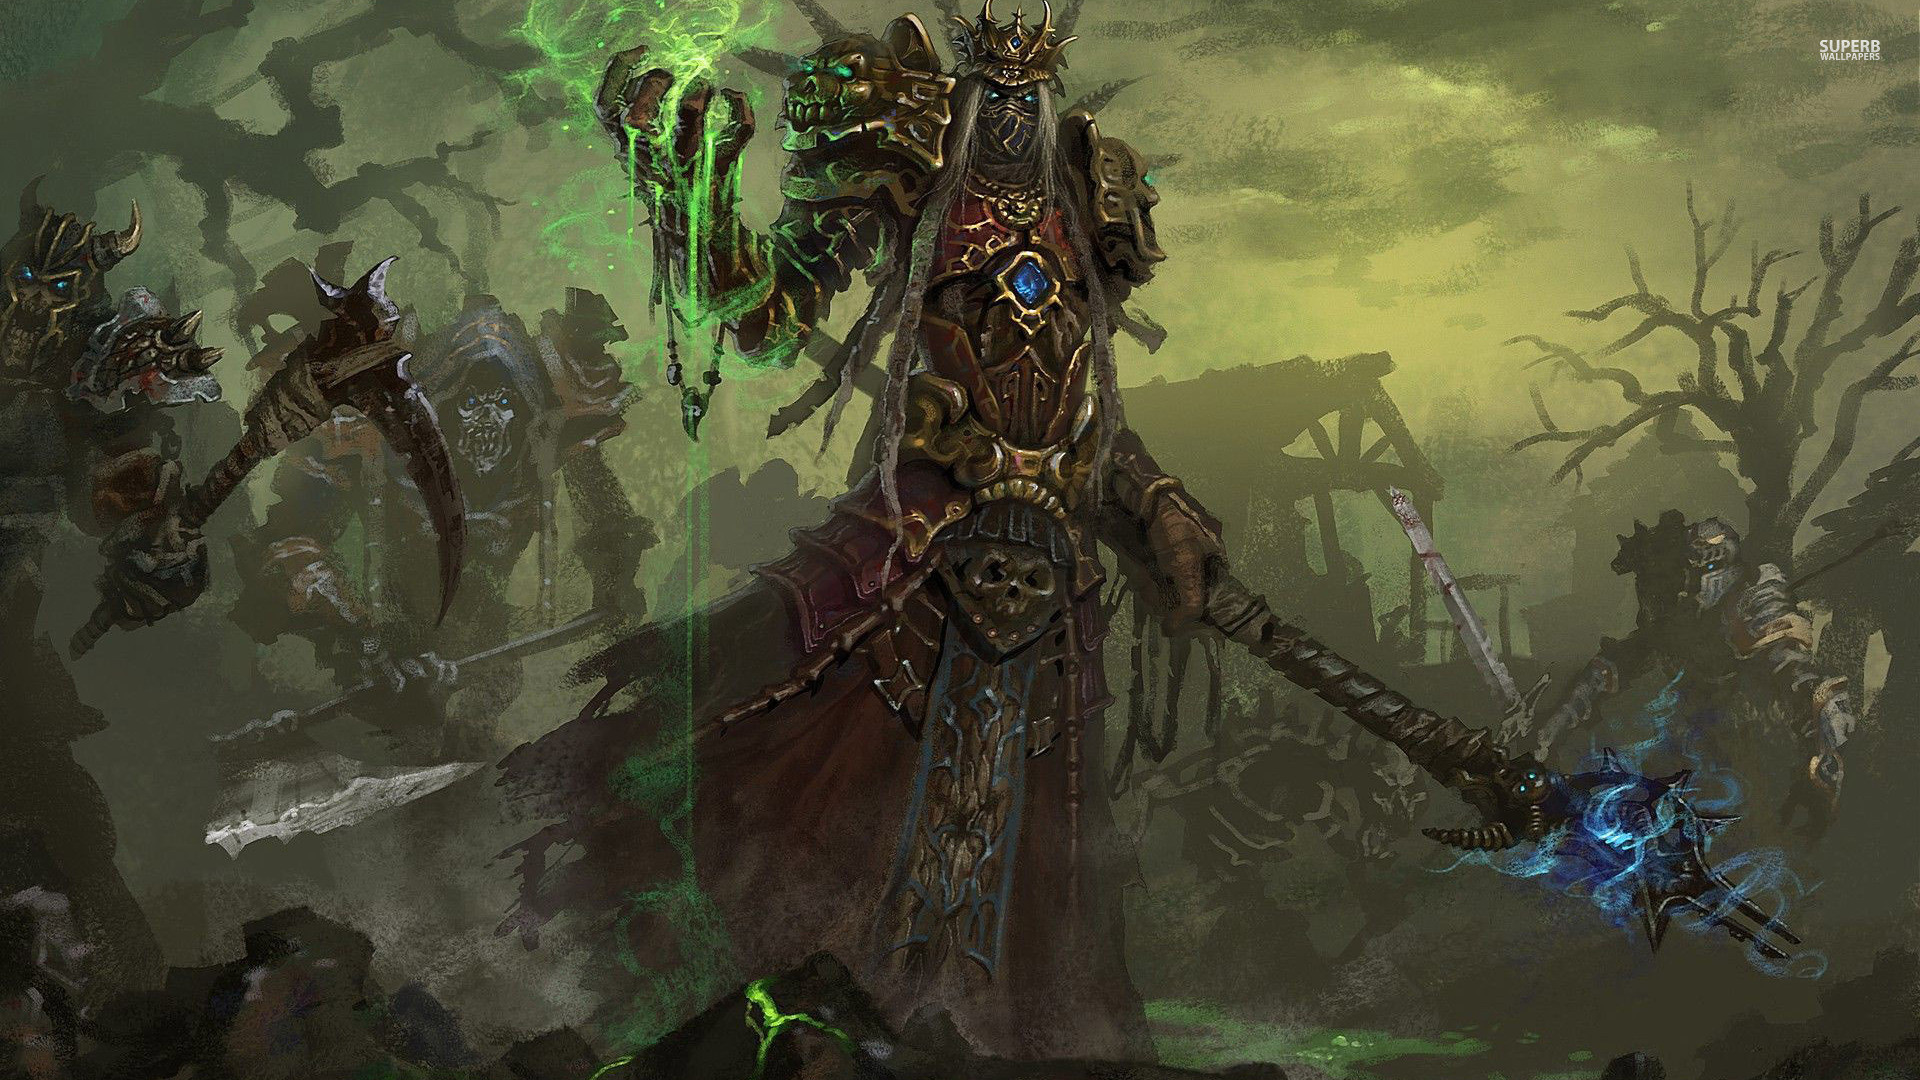 Undead warlock   World of Warcraft wallpaper   Game wallpapers